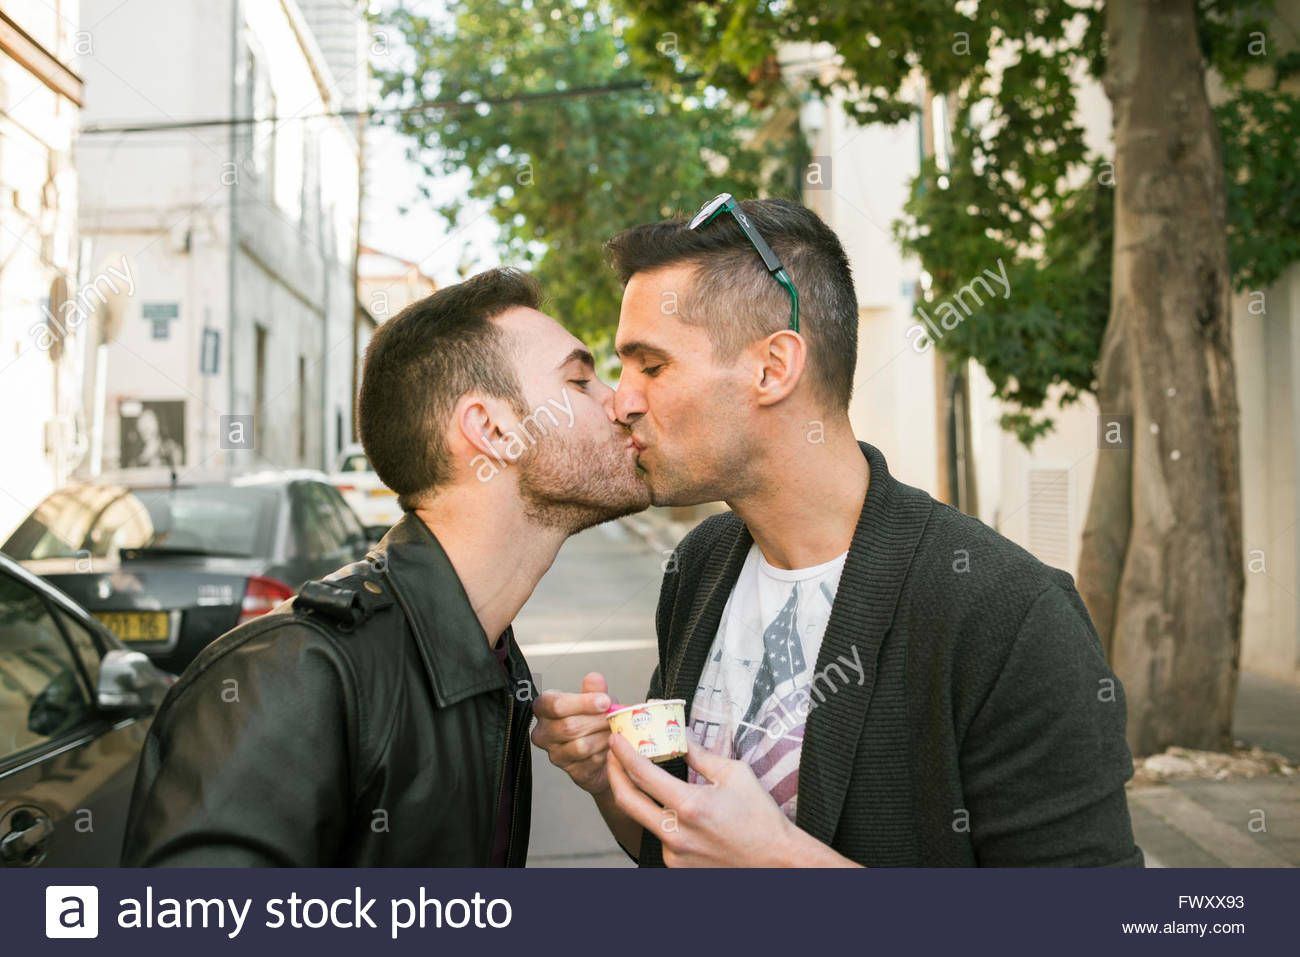 Huddle reccomend Photo of gay men kissing